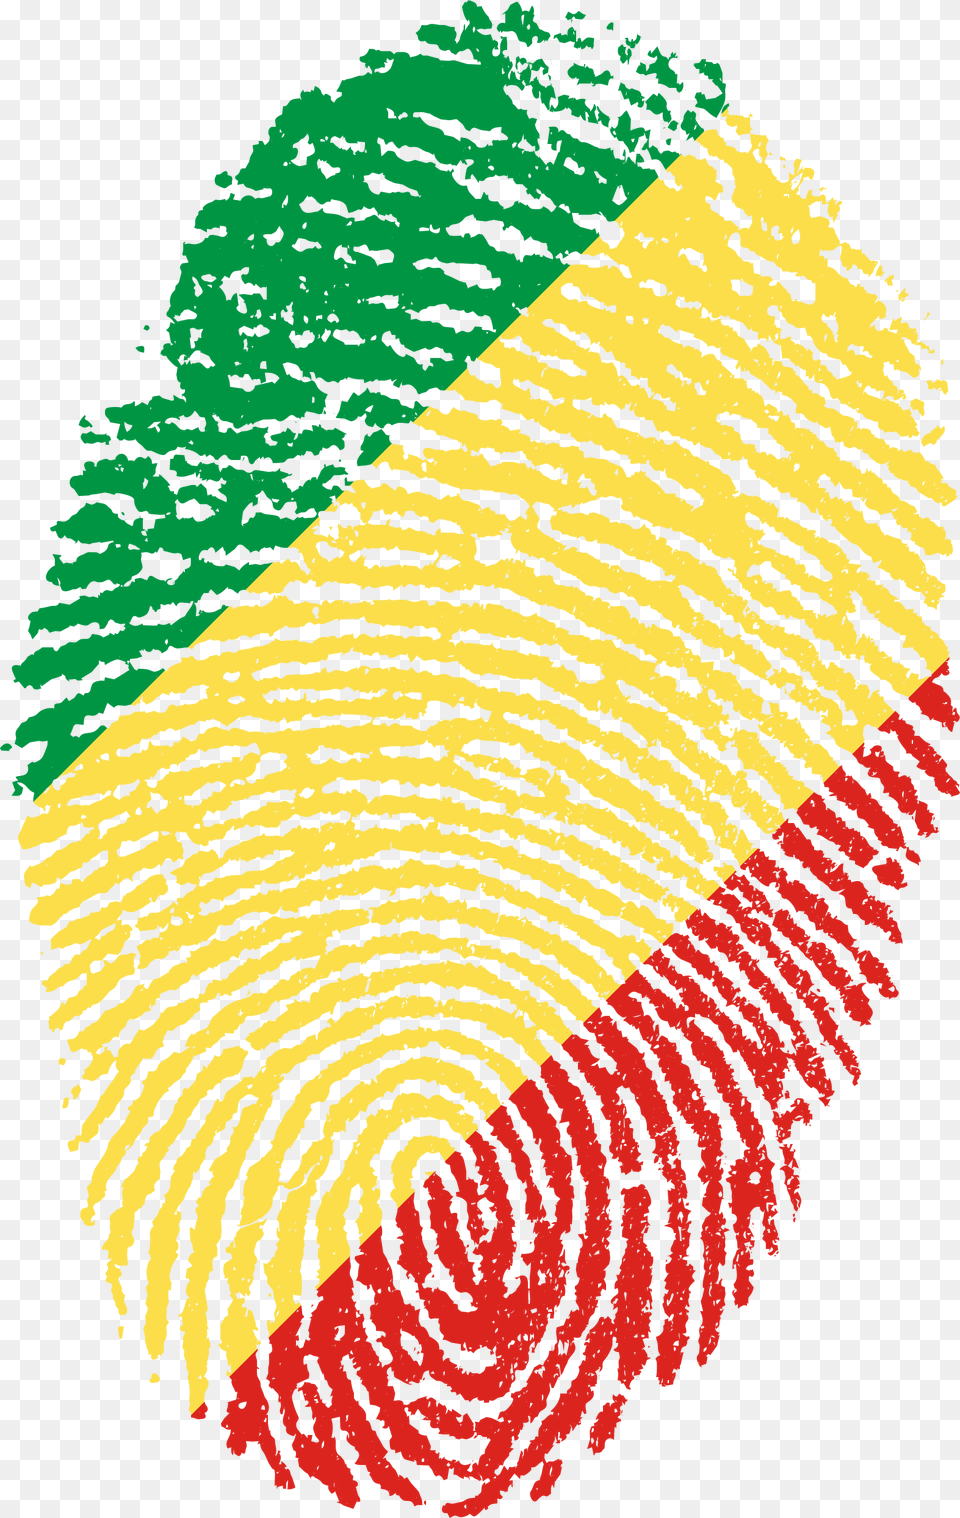 Congo Flag Fingerprint Country Trinidad And Tobago Finger Print, Home Decor, Art, Graphics, Rug Png Image